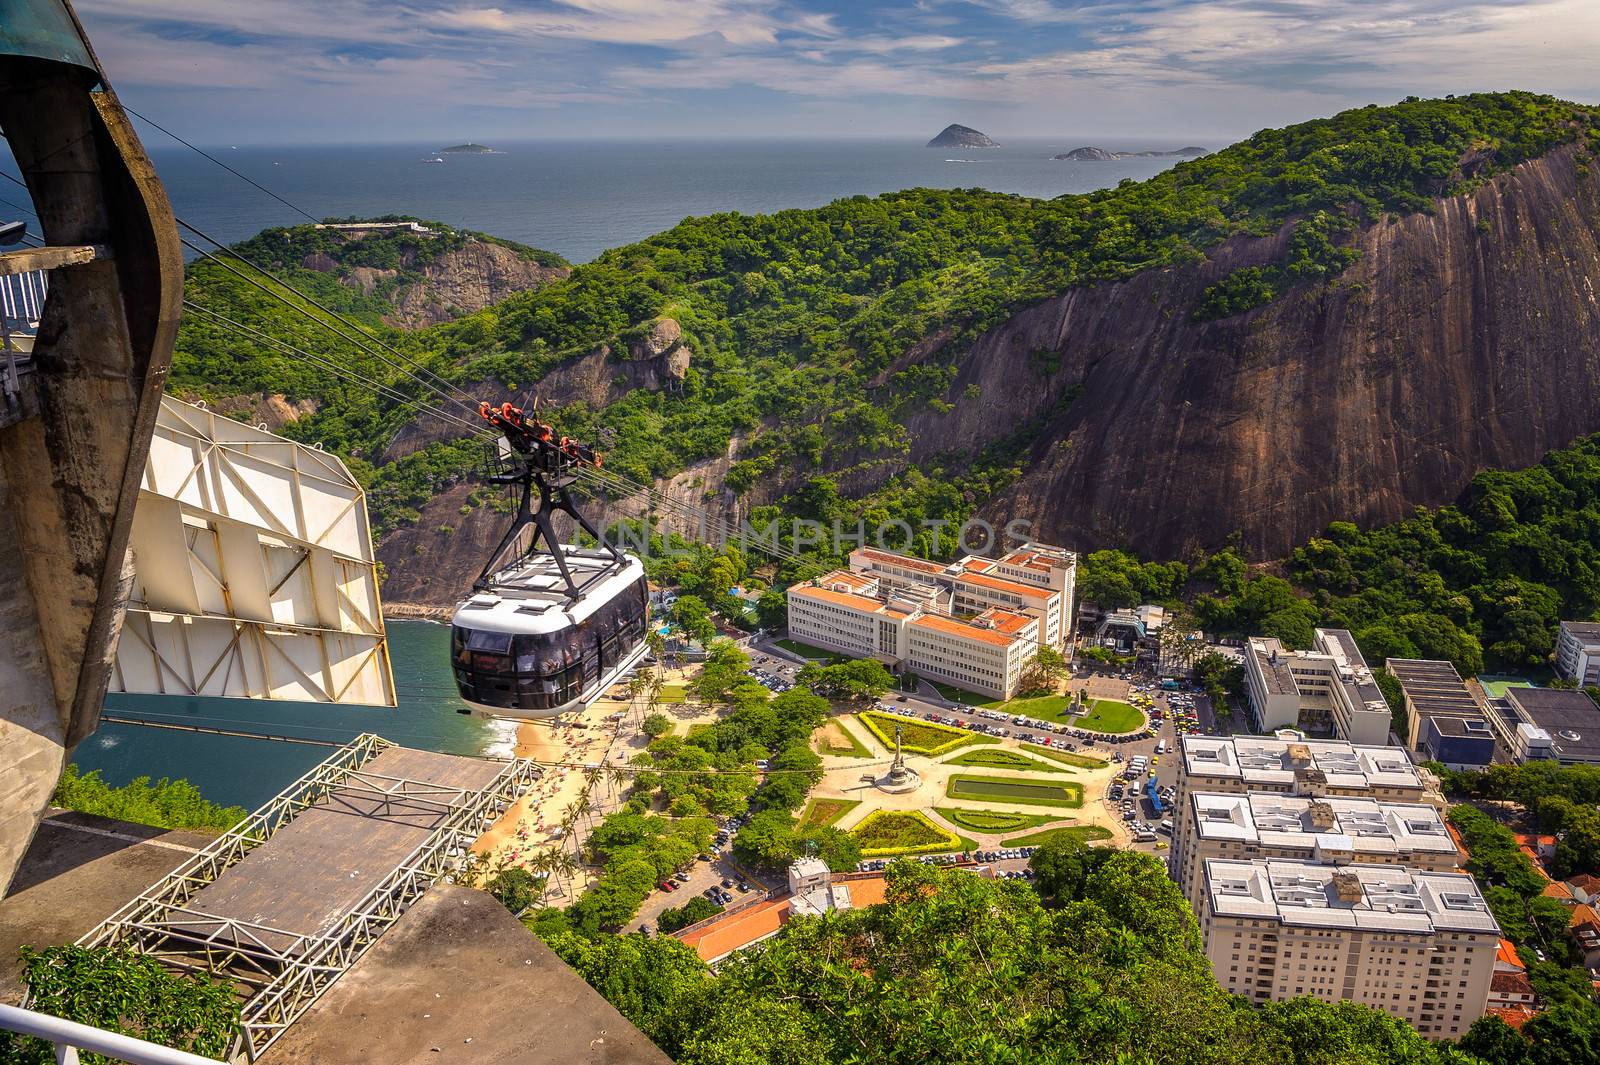 Cable car moving over a residential area, Urca, Rio de Janeiro, Brazil